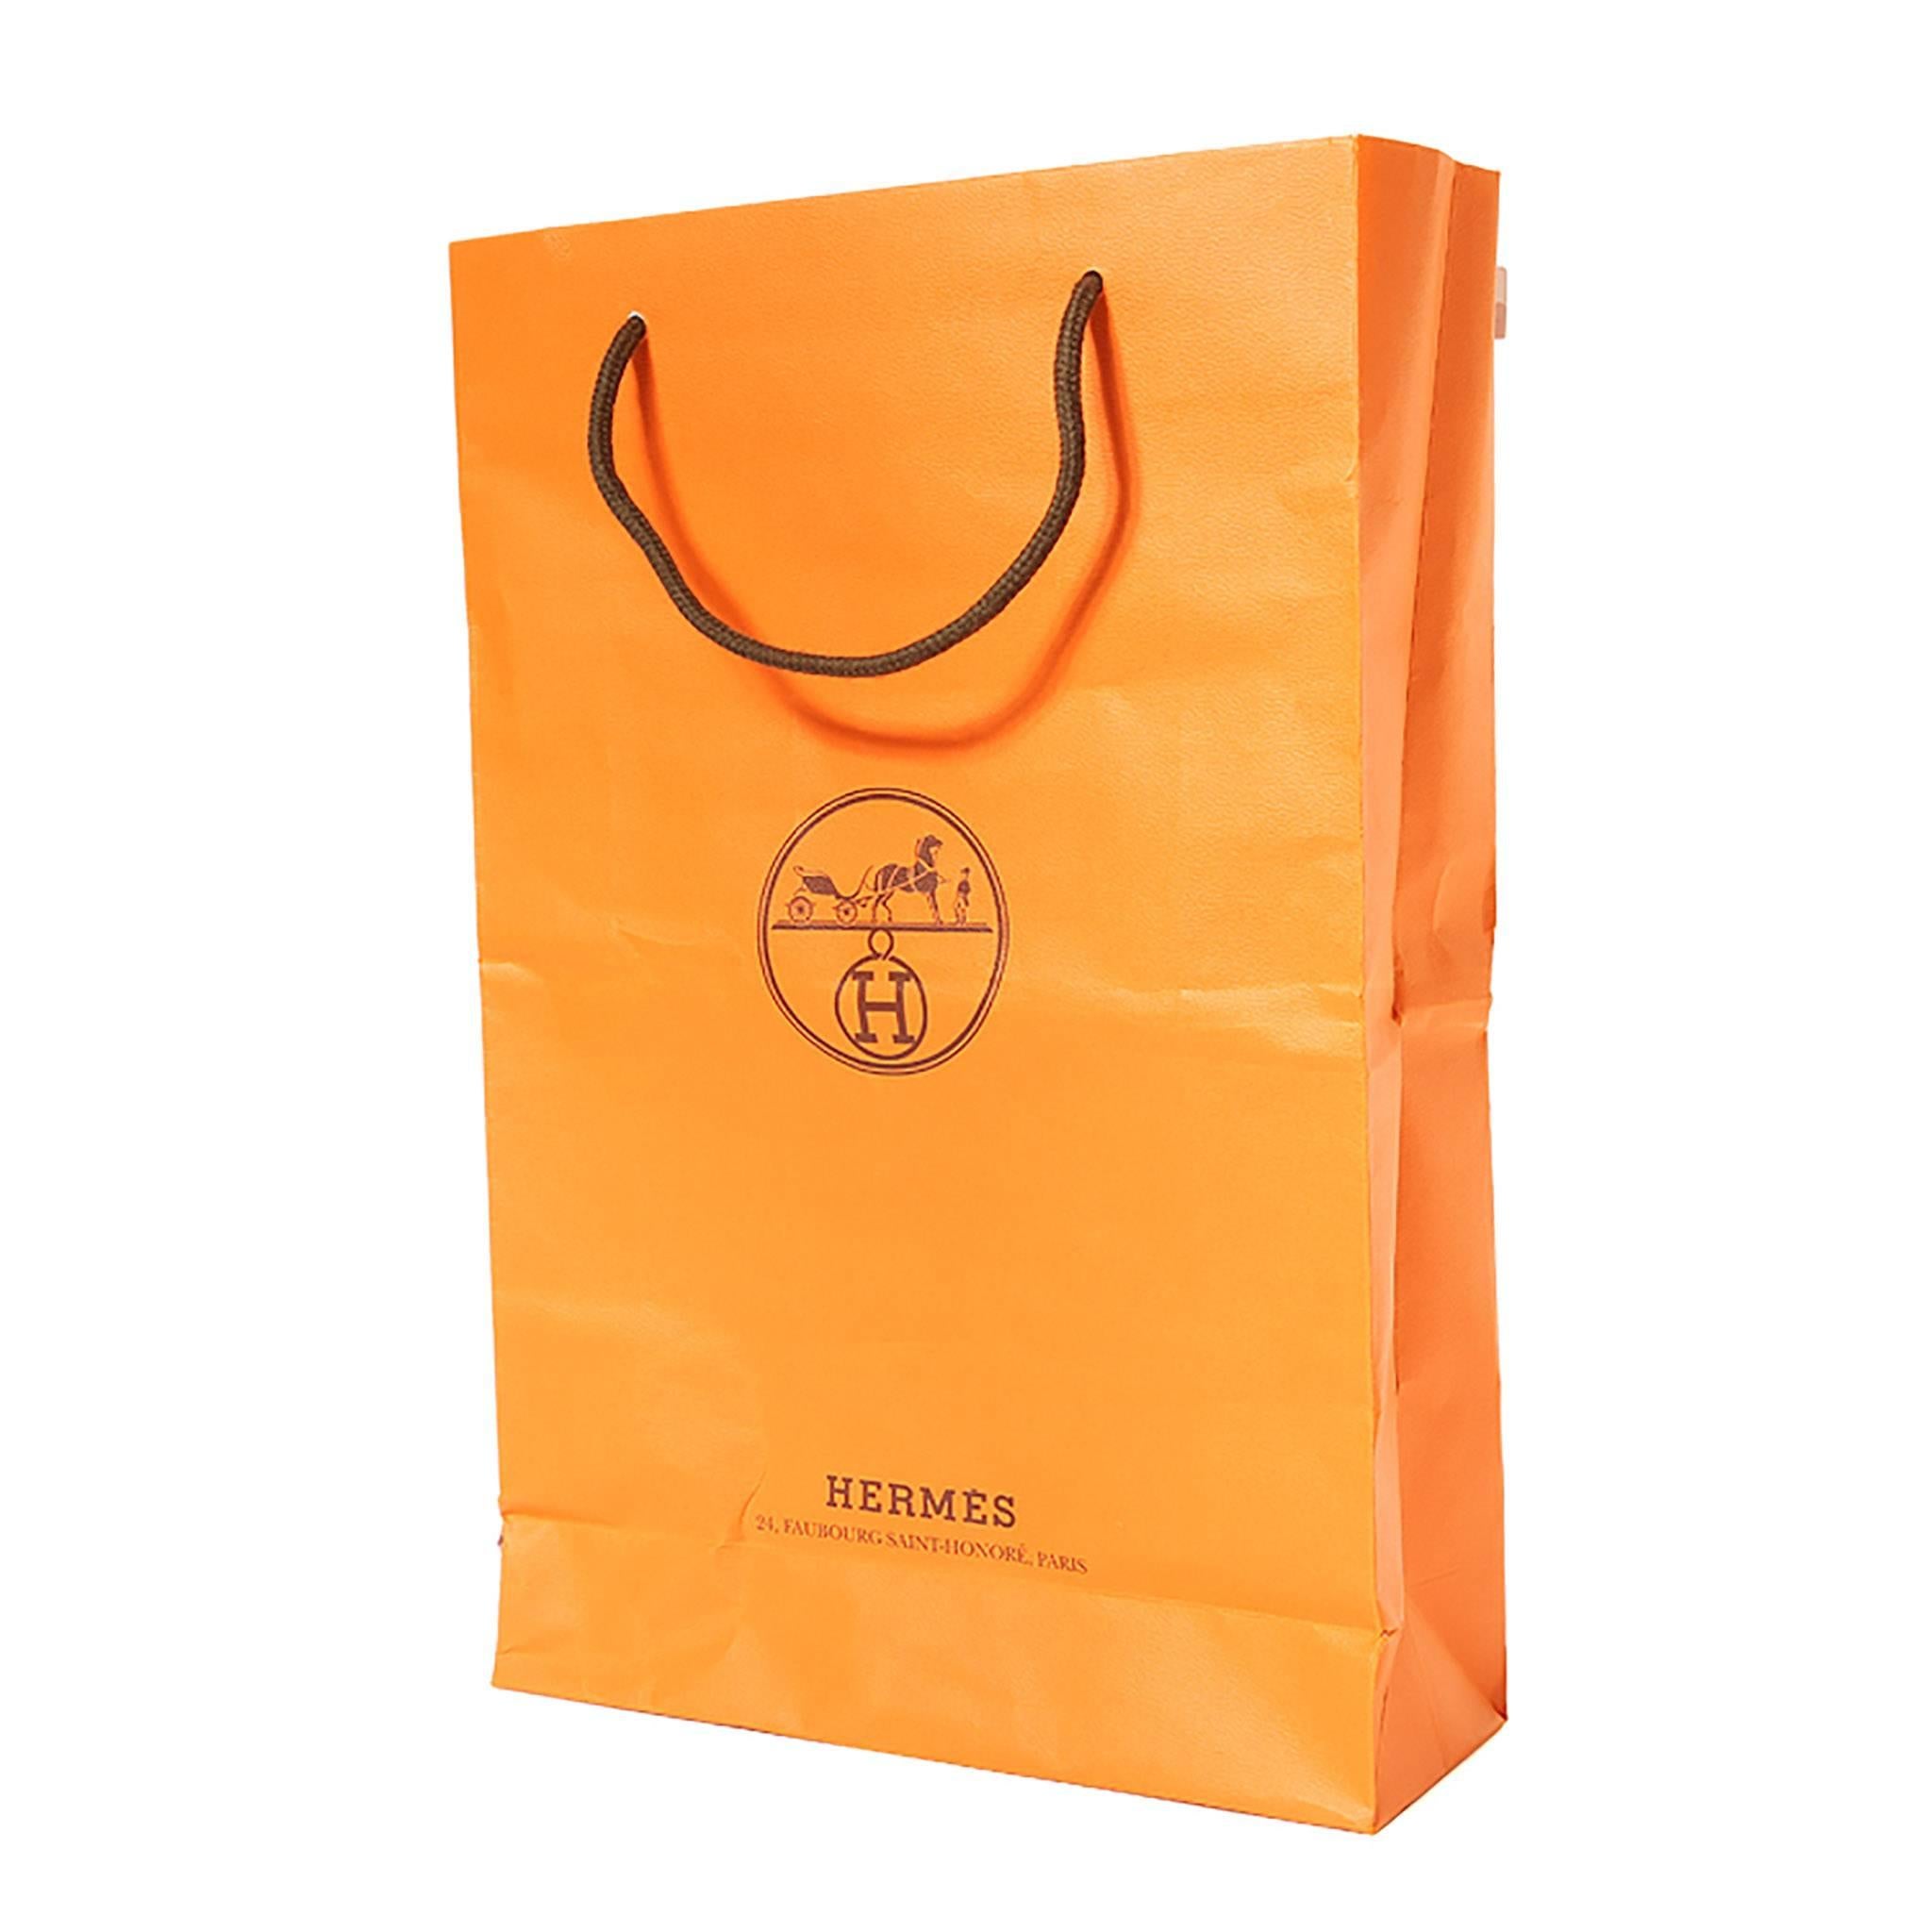 Hermes Canvas Shopping Bag Orange 2